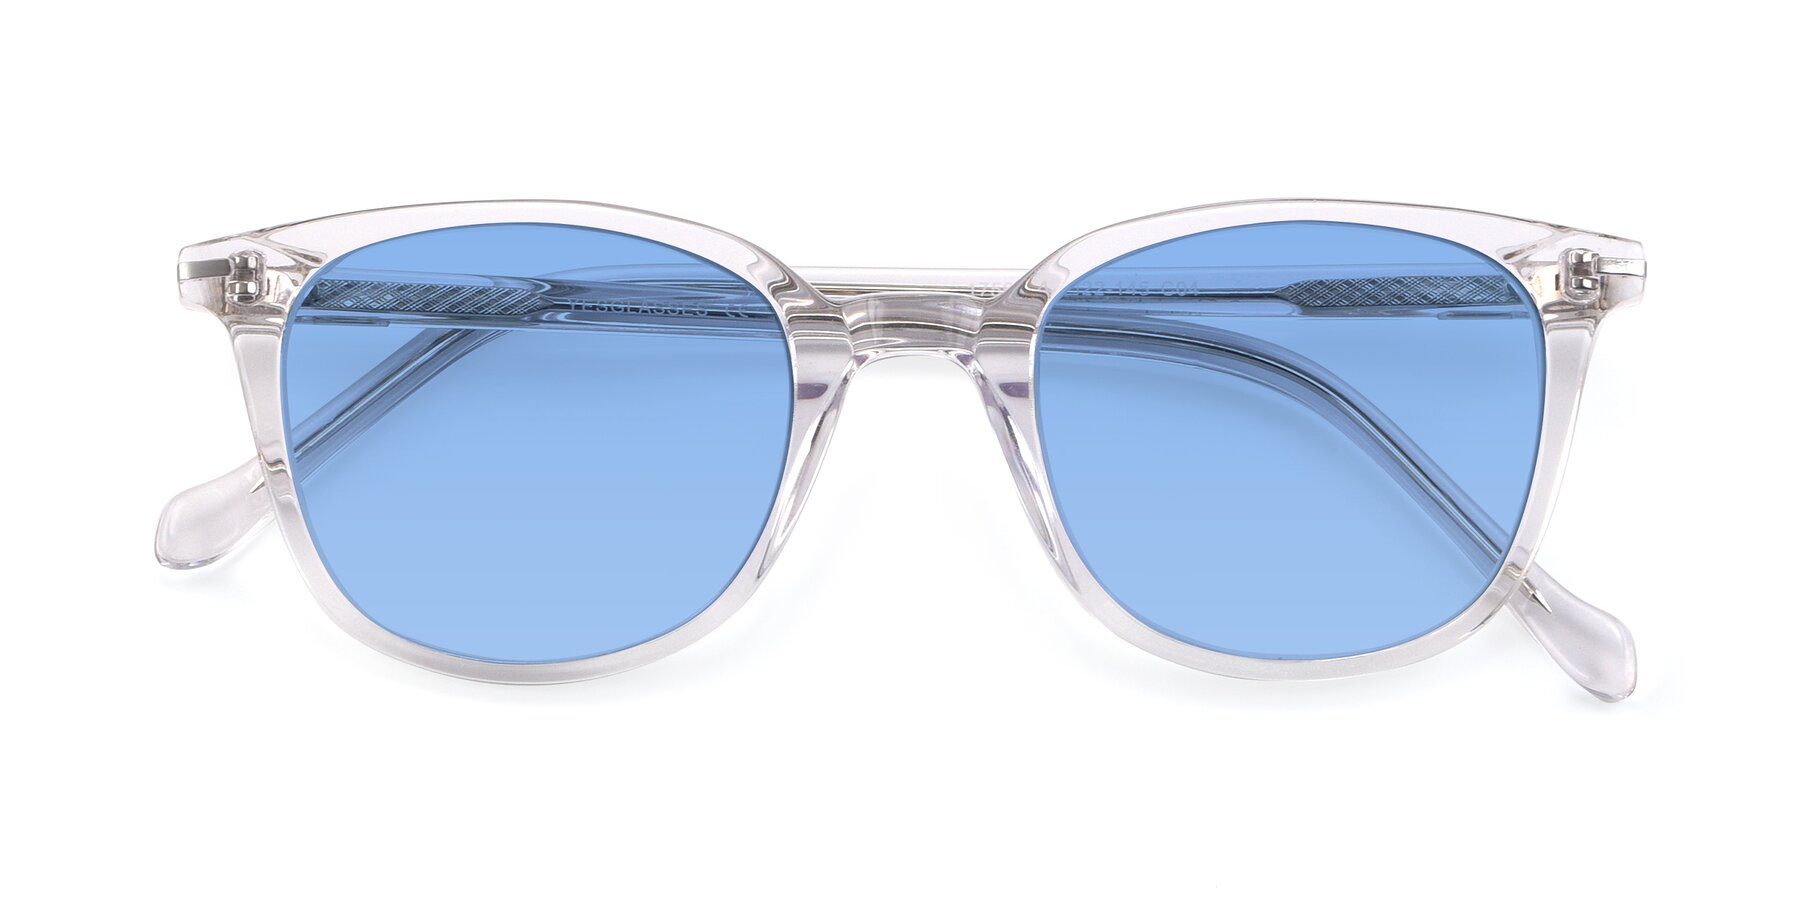 Retro Unisex Clear Frame Sunglasses Mirror UV400 Lens Round Glasses | eBay